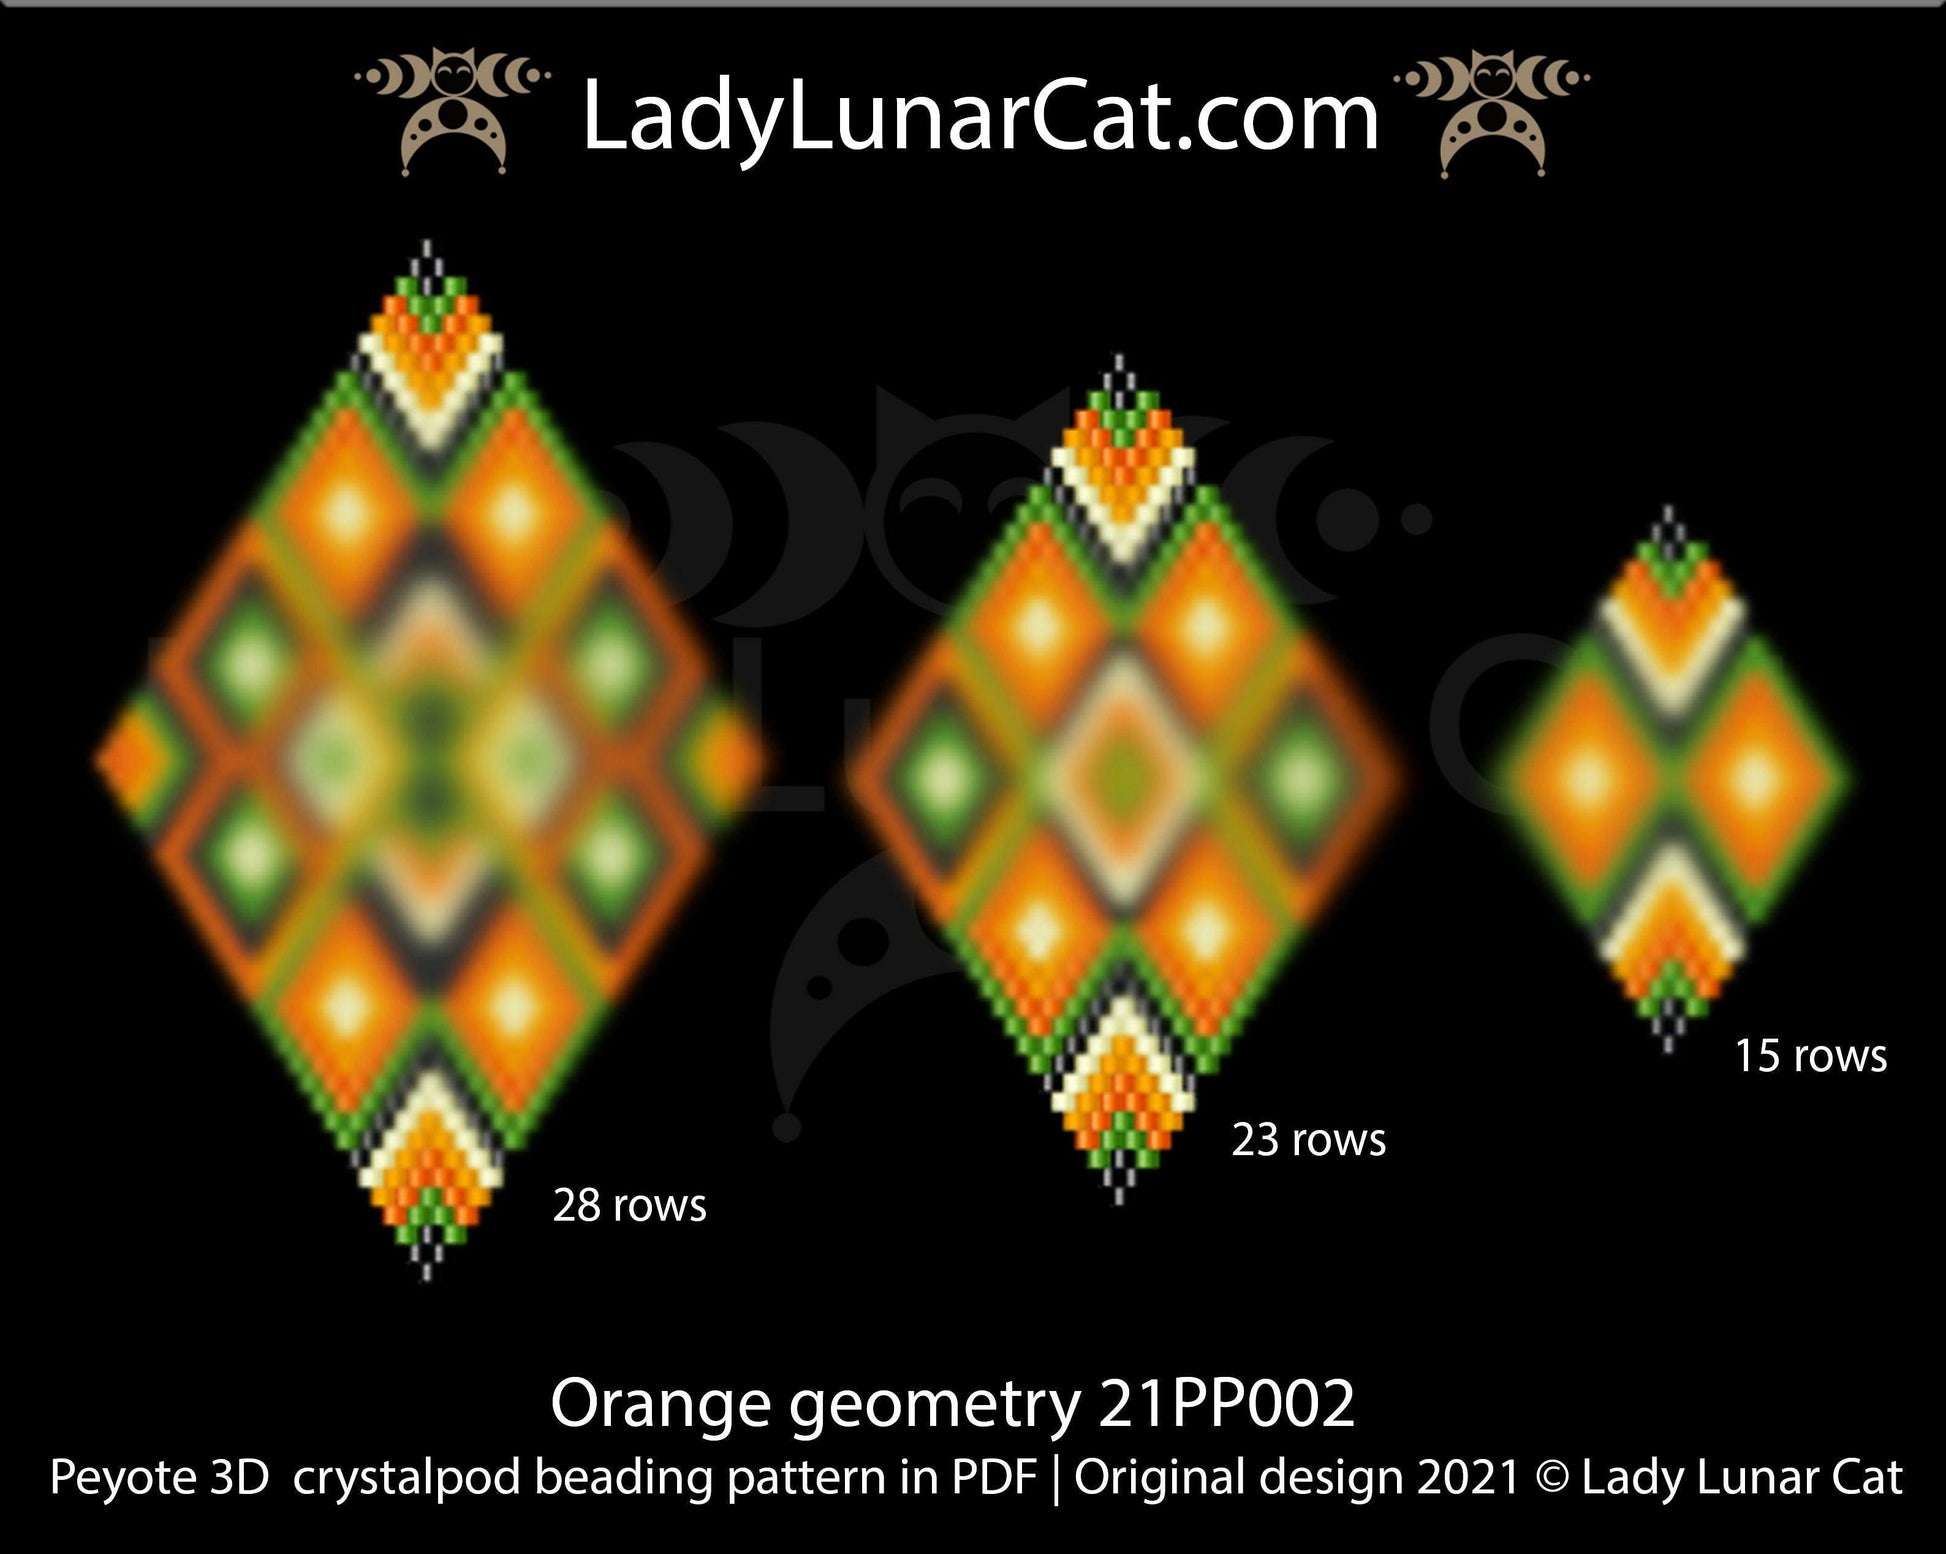 3d peyote pod pattern pattern for beading Orange geometry 21PP002 LadyLunarCat